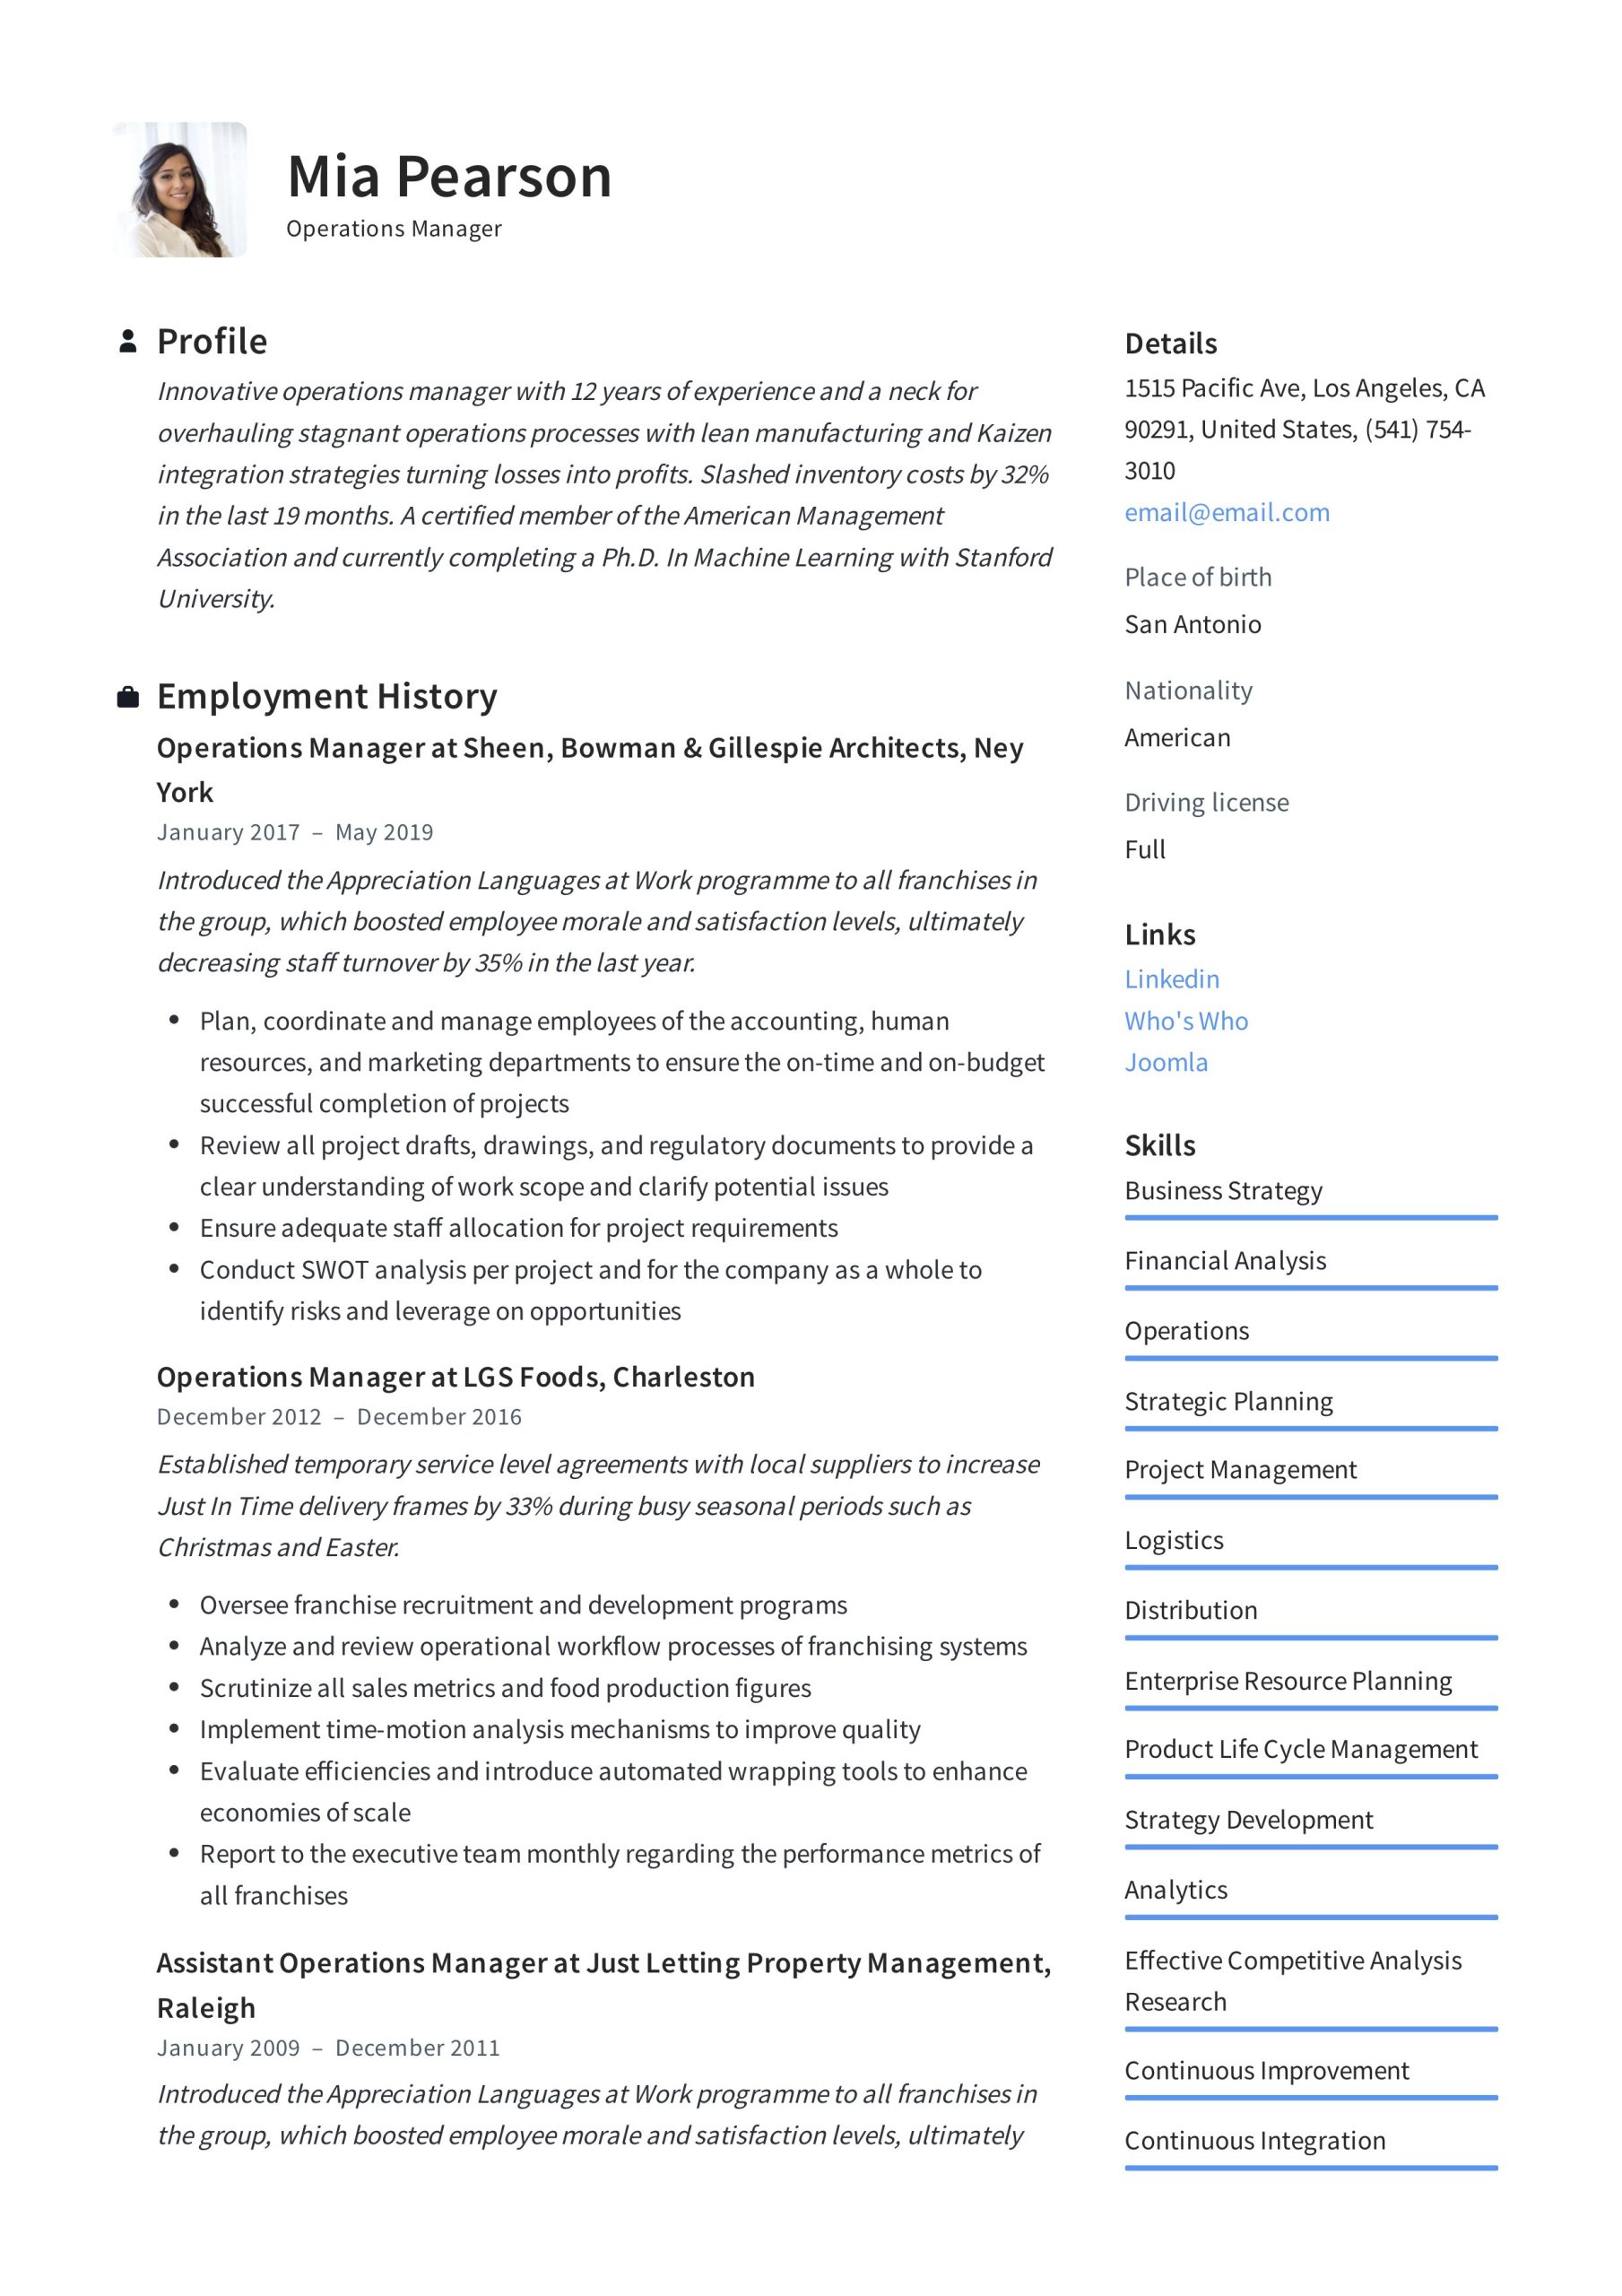 Operations Manager Job Description Resume Sample Operations Manager Resume & Writing Guide  12 Examples Pdf